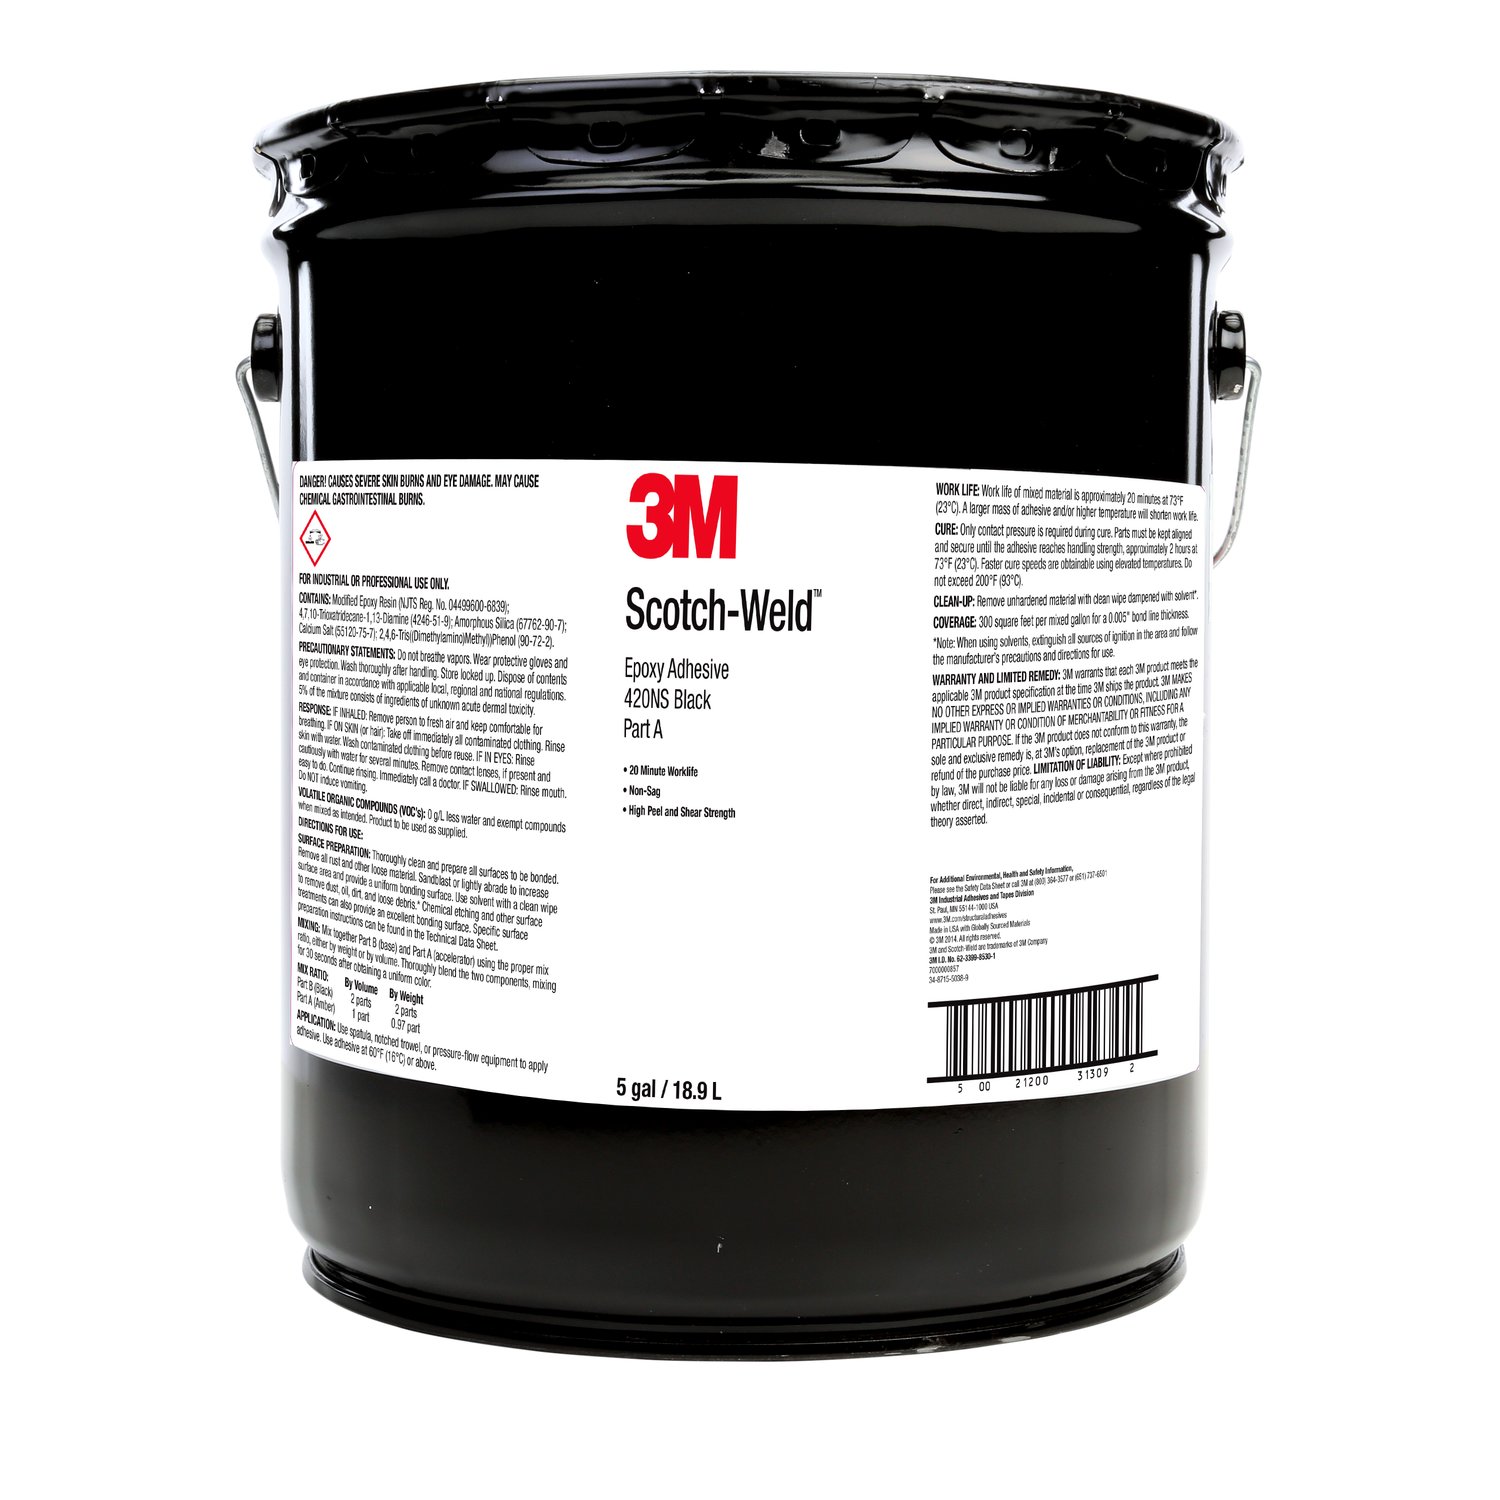 7000000857 - 3M Scotch-Weld Epoxy Adhesive 420NS, Black, Part A, 5 Gallon (Pail), 1
Can/Drum